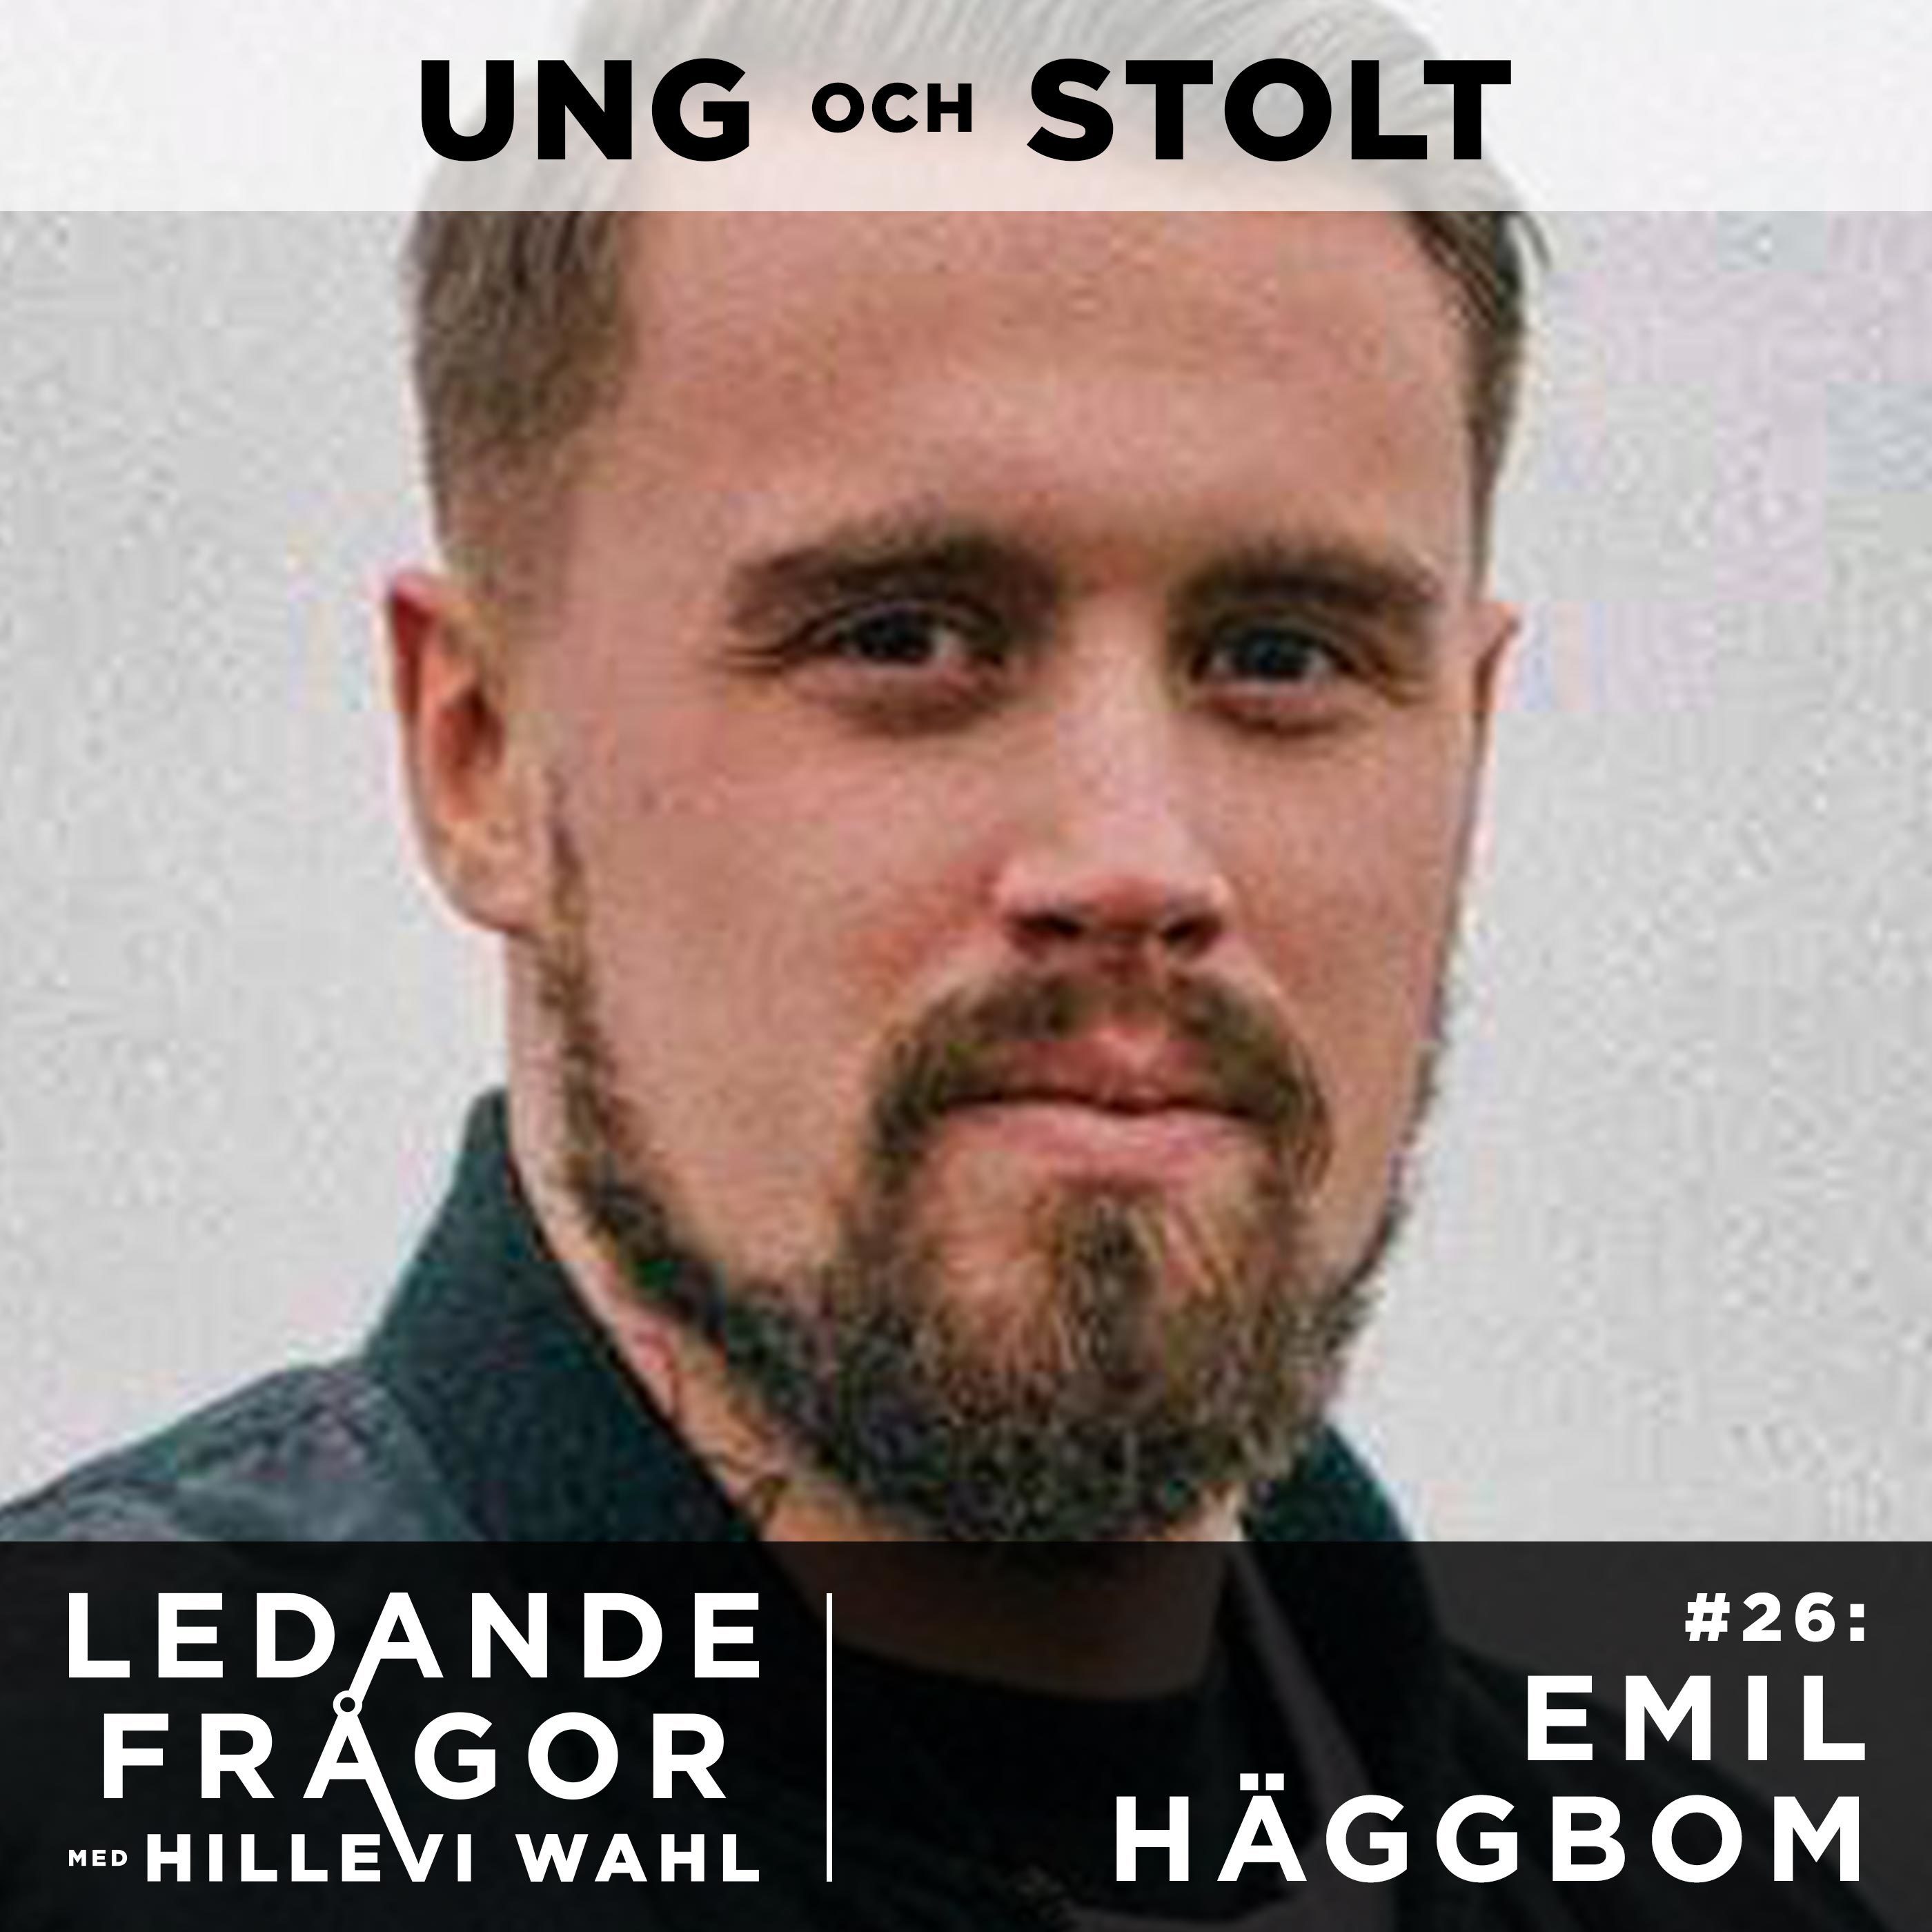 #26: Emil Häggbom - Hjärnkoll Ung